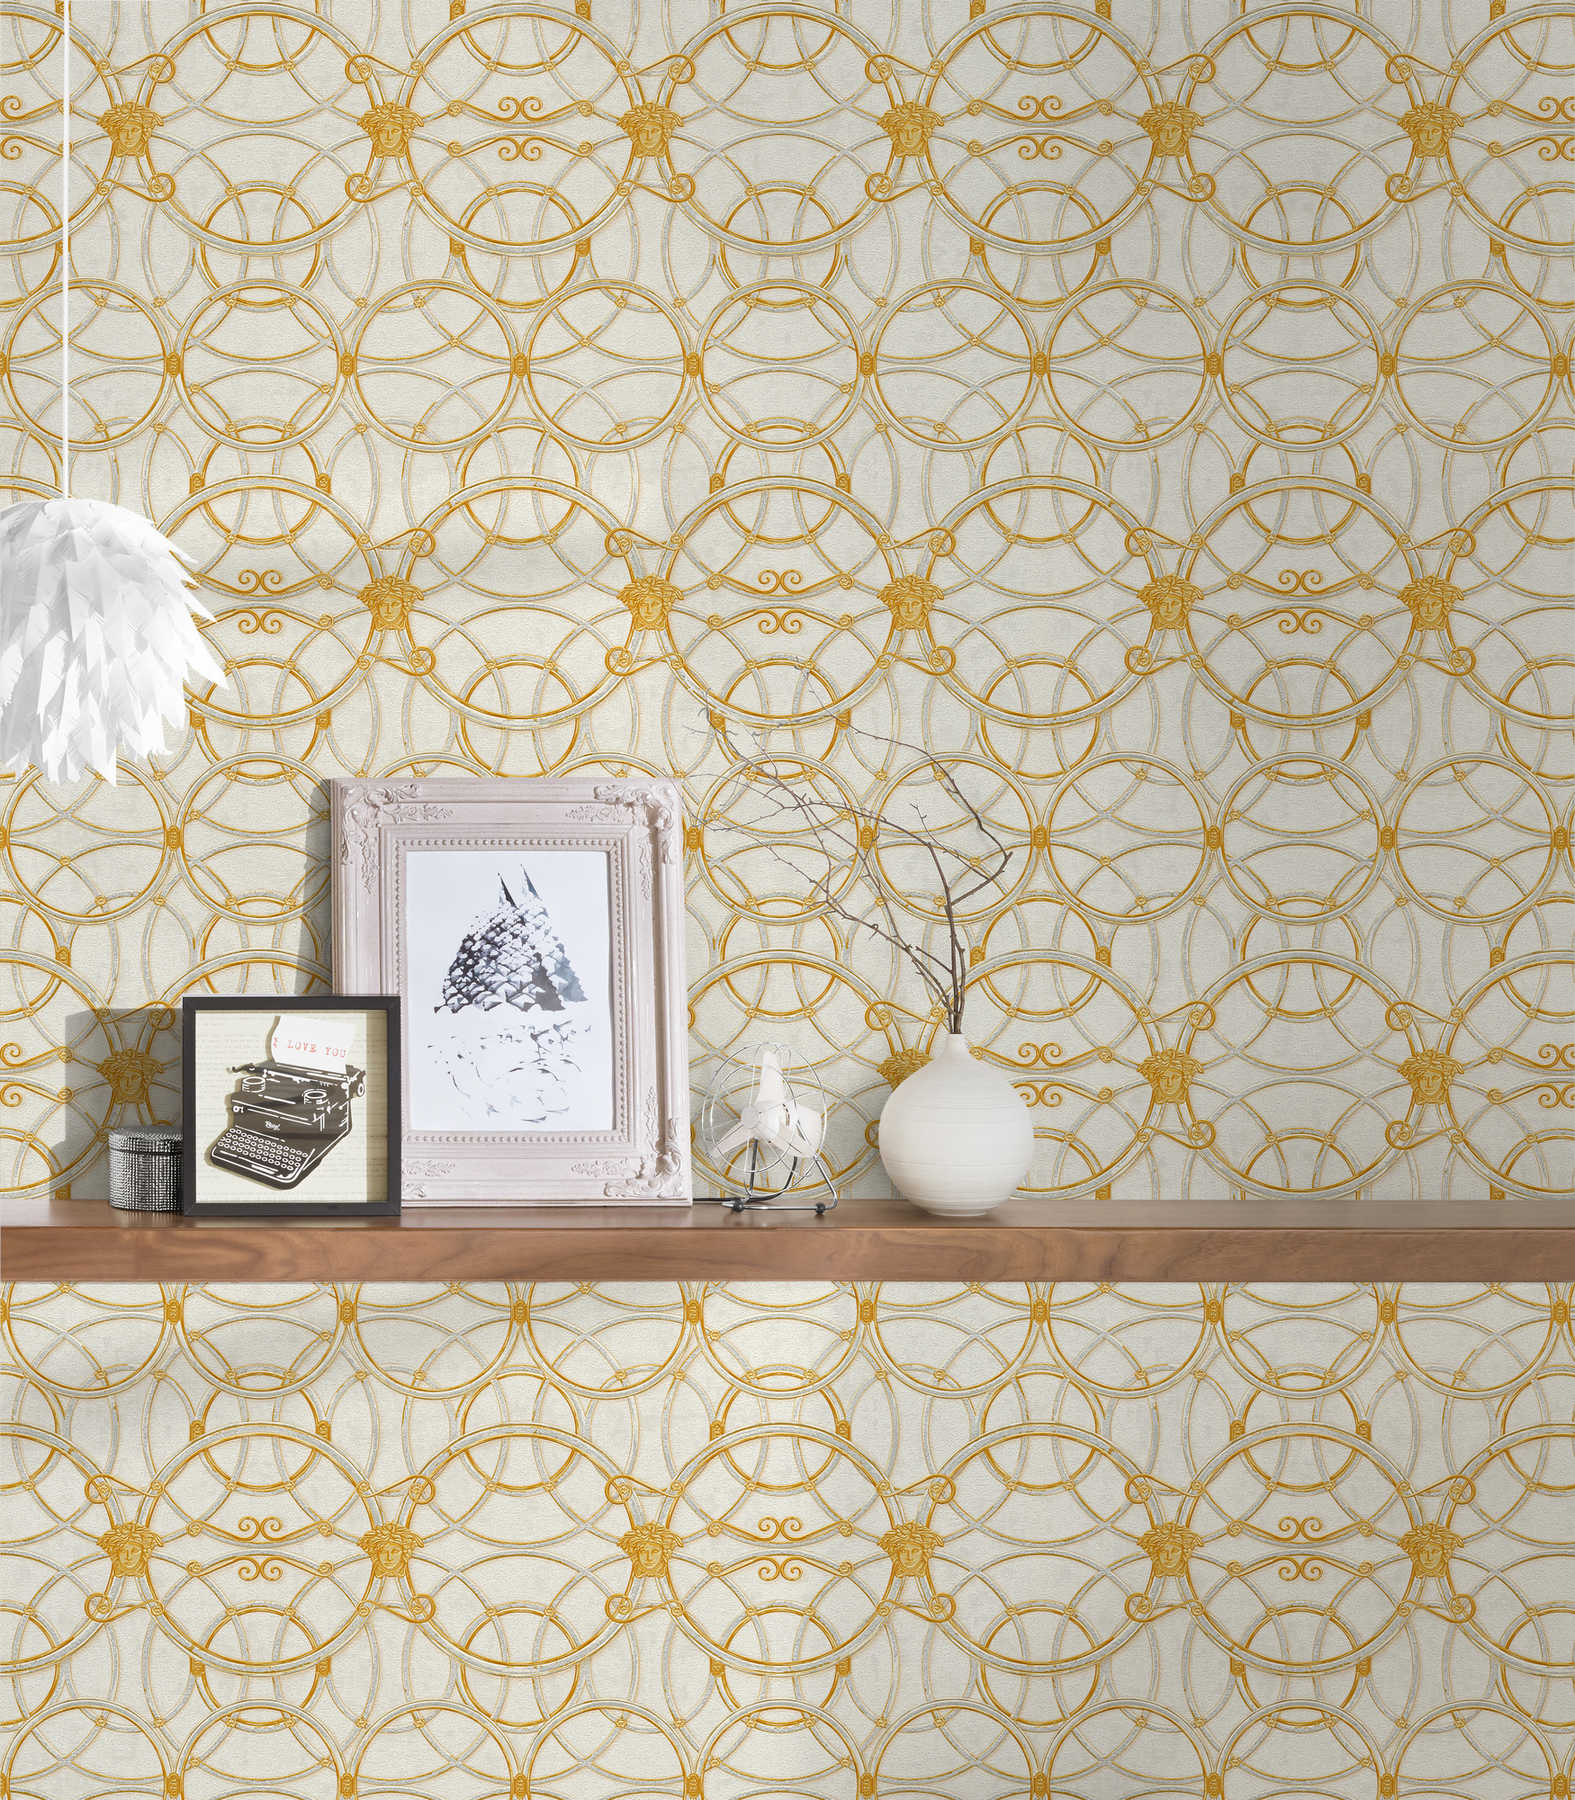             VERSACE Home behang cirkelpatroon en Medusa - goud, crème, wit
        